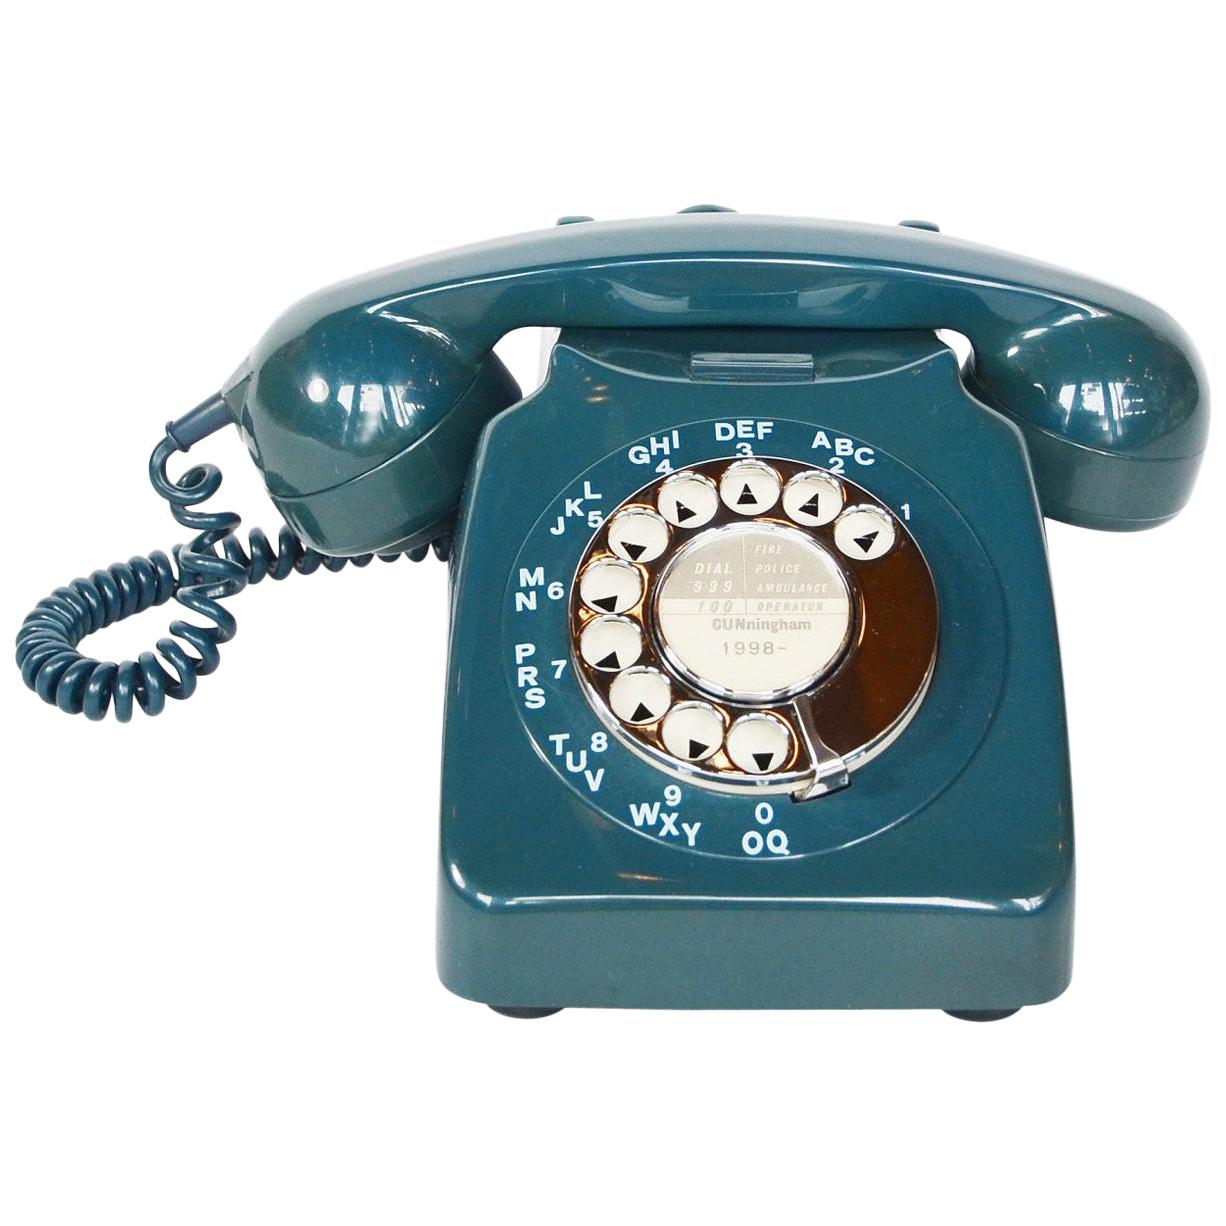 Original 1970s Model 746L Telephone Full Working Order